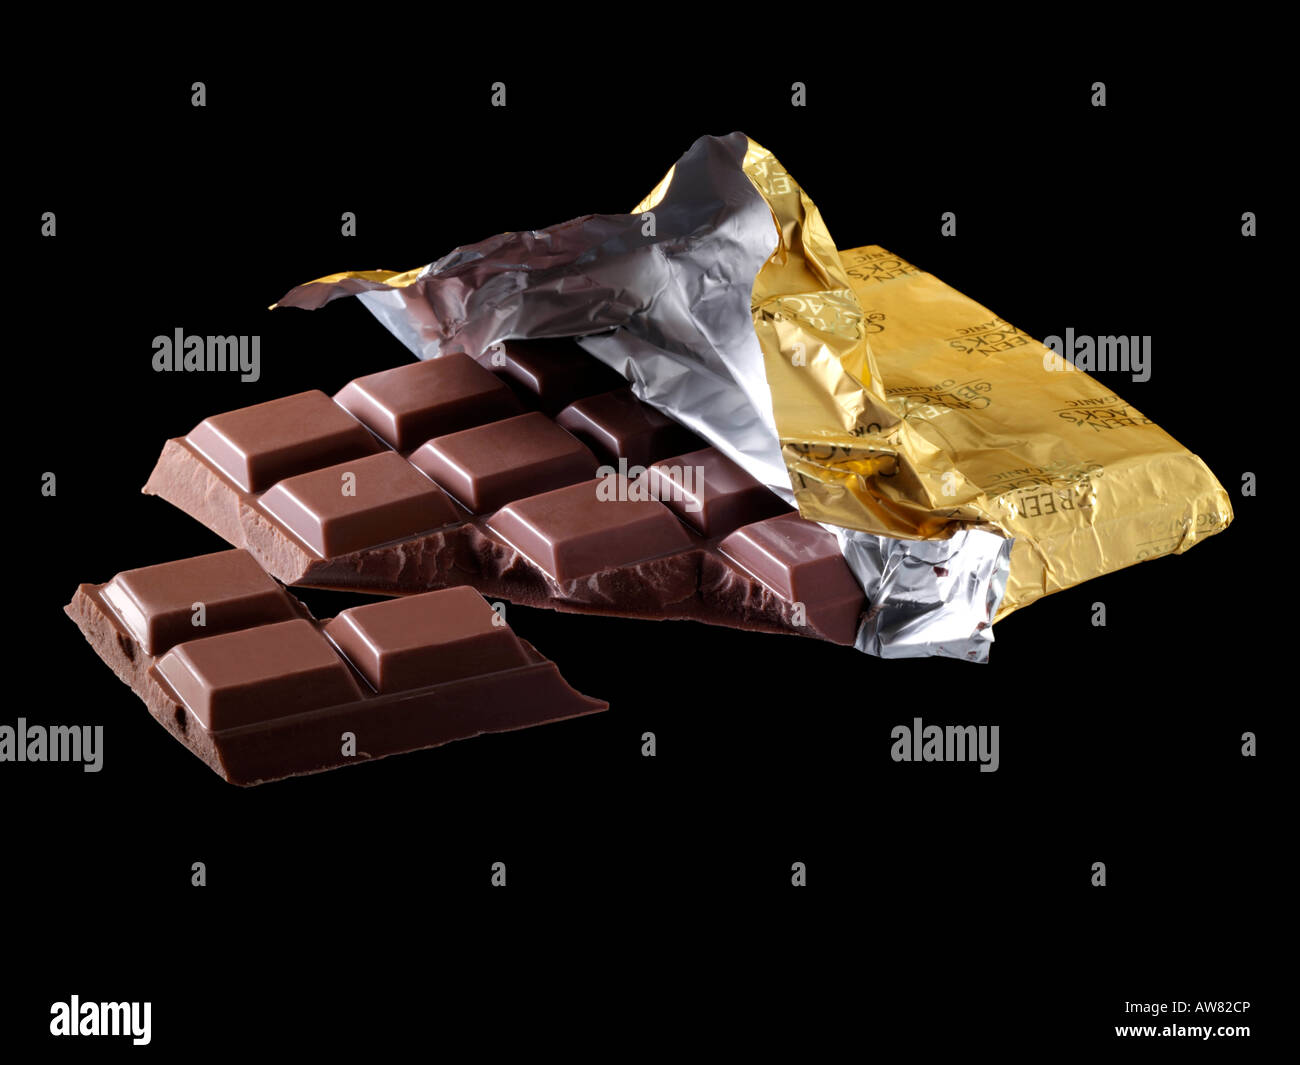 Barra de chocolate con envoltura de papel aluminio dorado Fotografía de  stock - Alamy